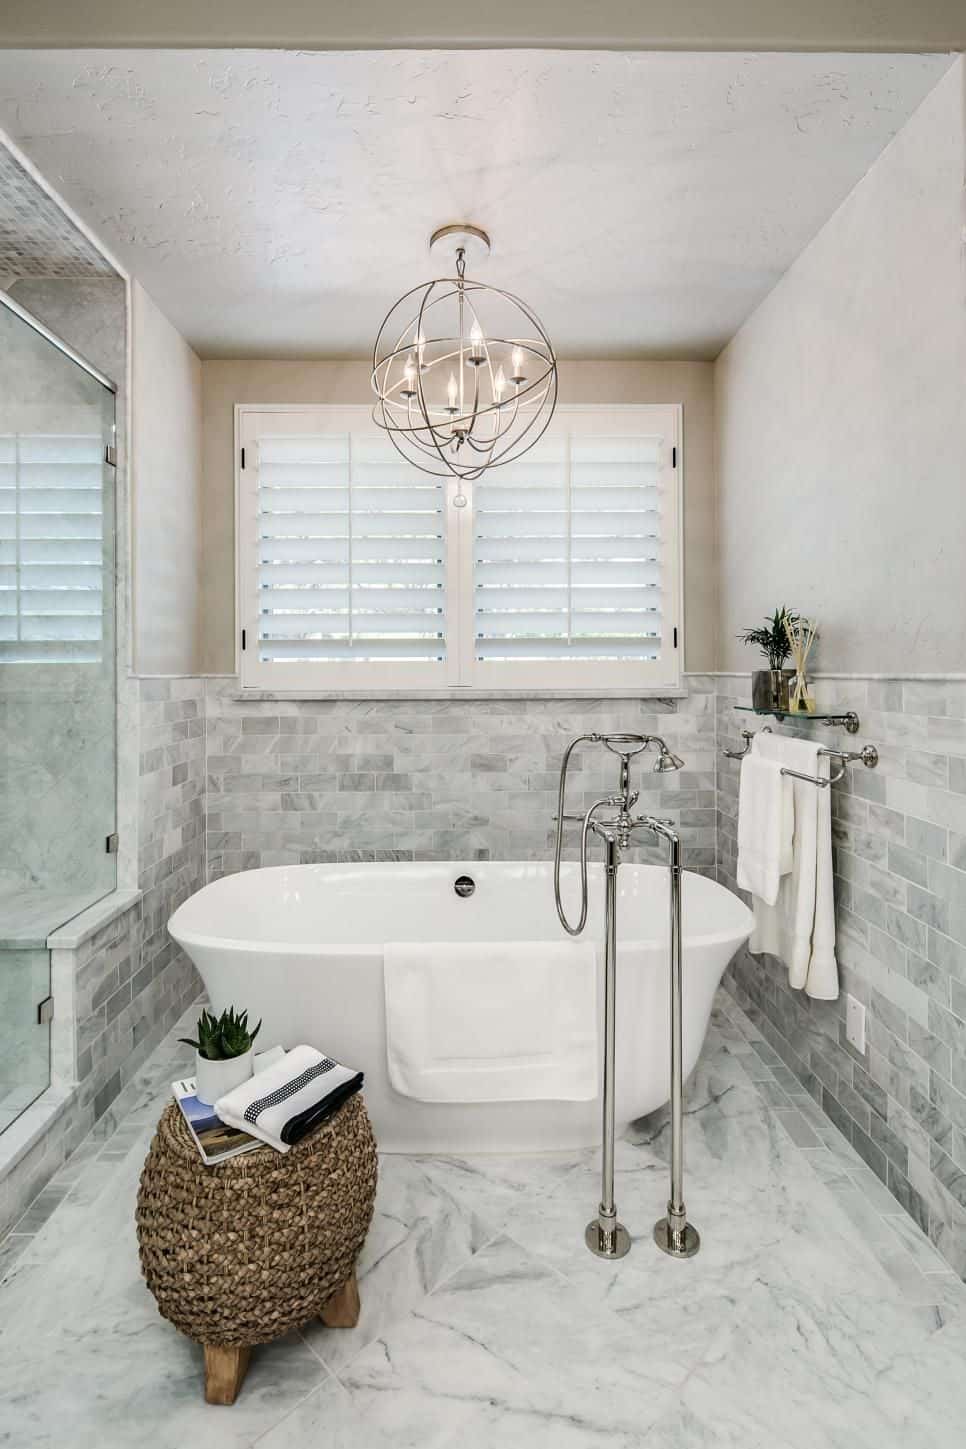 sleek chandelier in the bathroom - Основы дизайна для мечтательной ванной комнаты